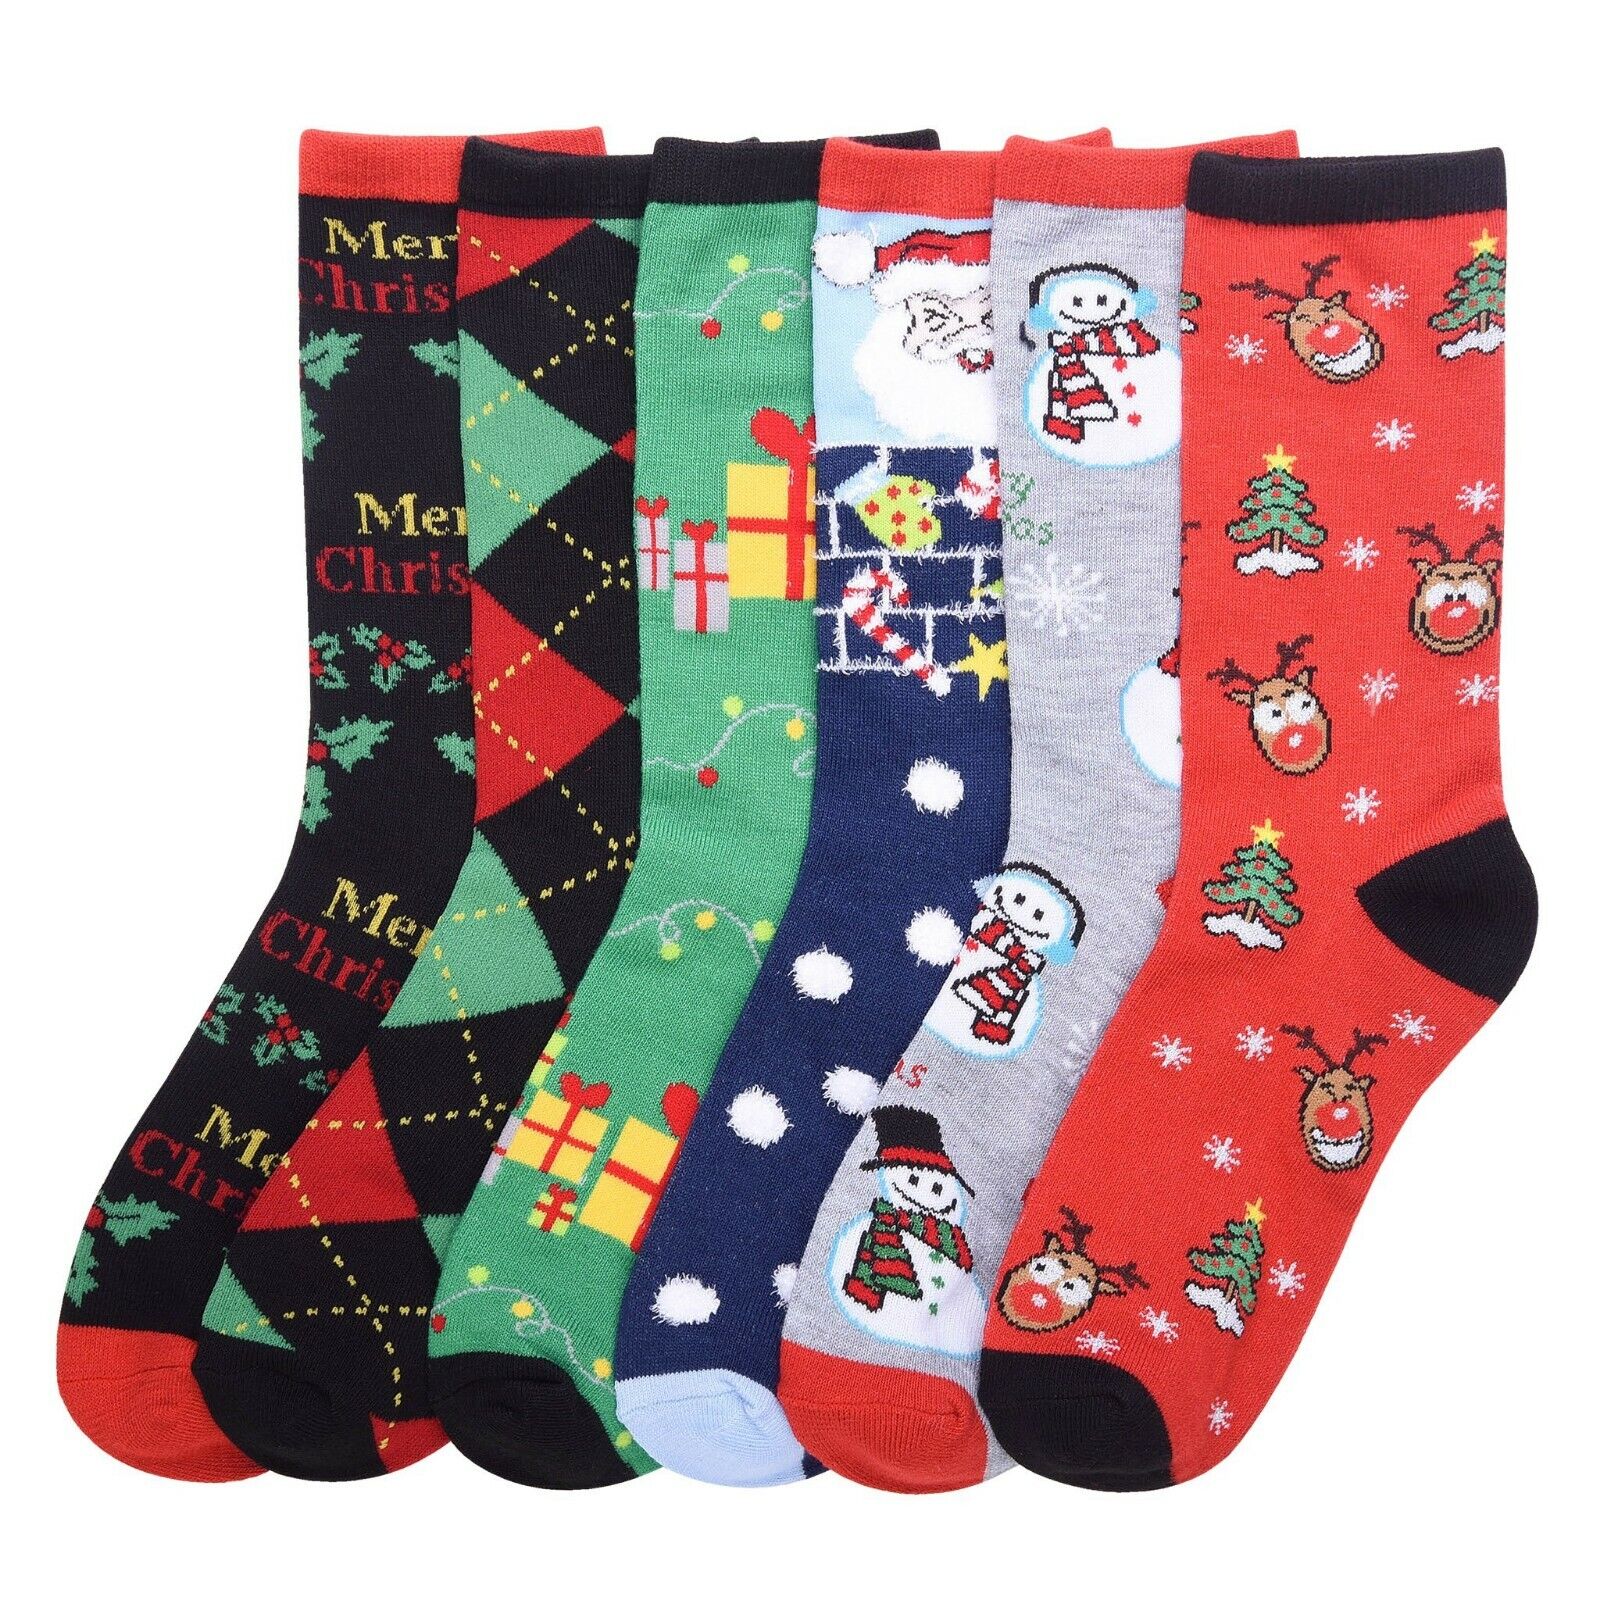 3 Pairs Christmas Crew Socks Winter Warm Xmas Stocking Stuffers Gift #1 9-11 Mamia